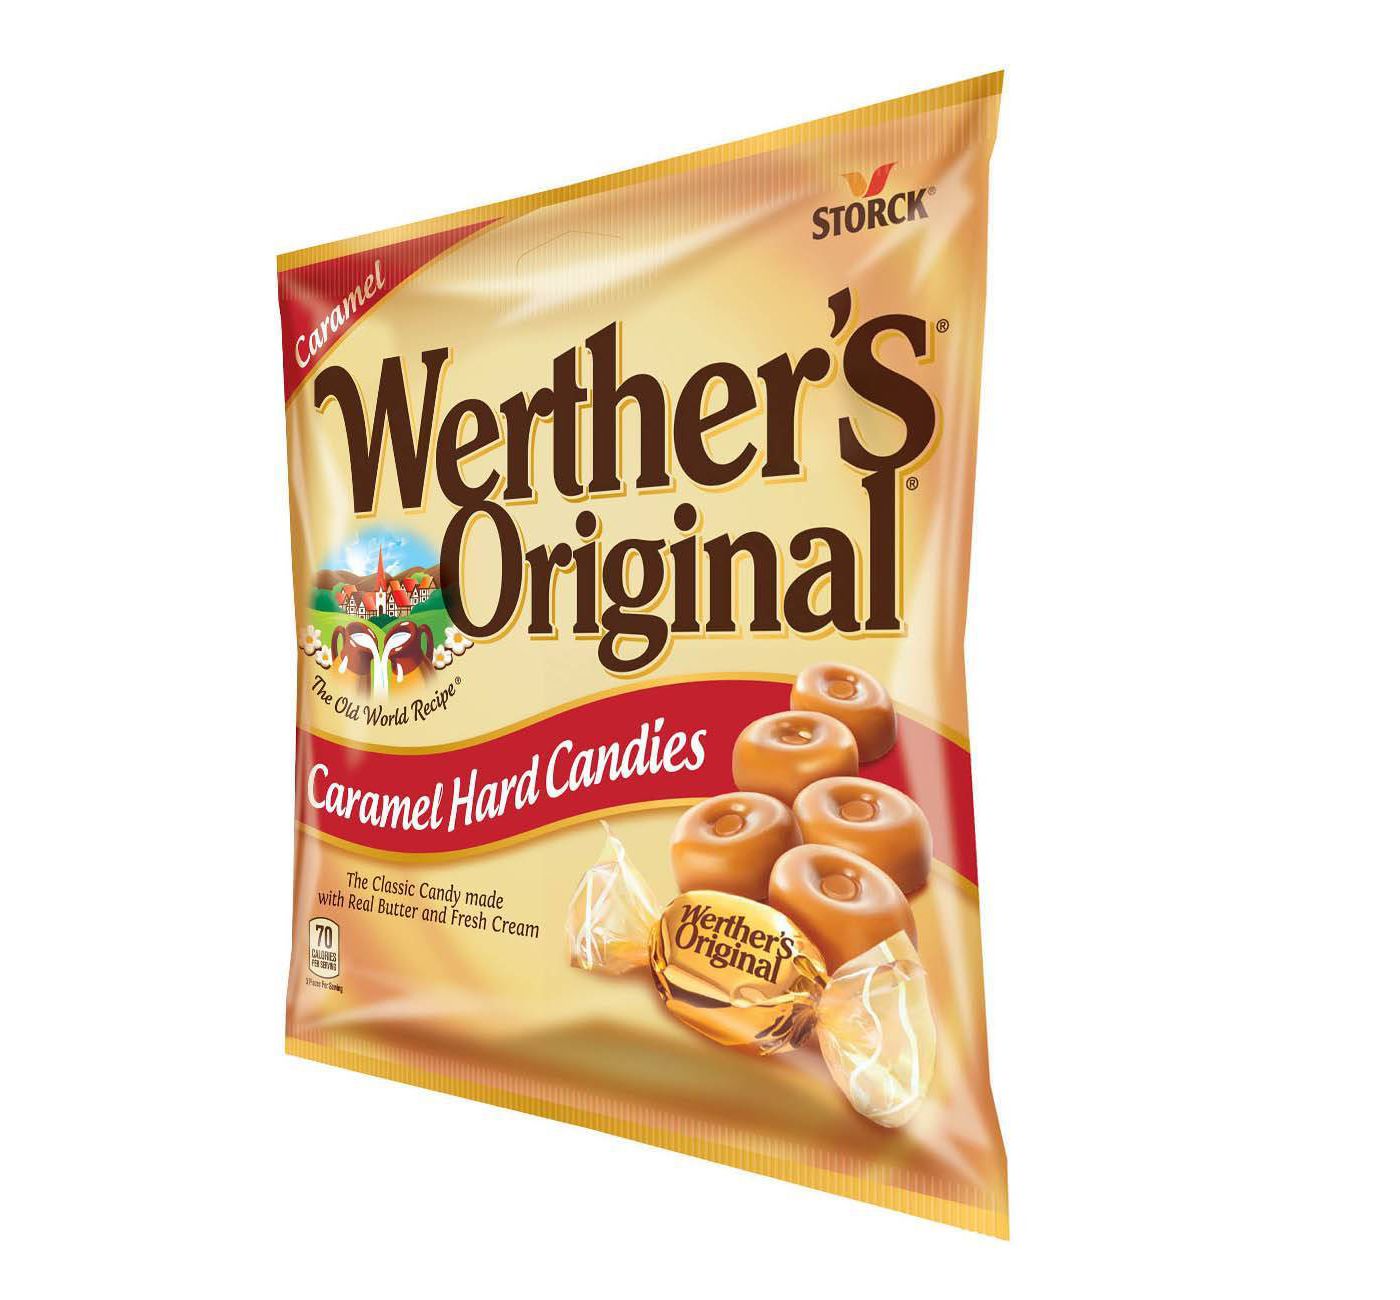 Werther's Original Caramel Hard Candies, 5.5 oz